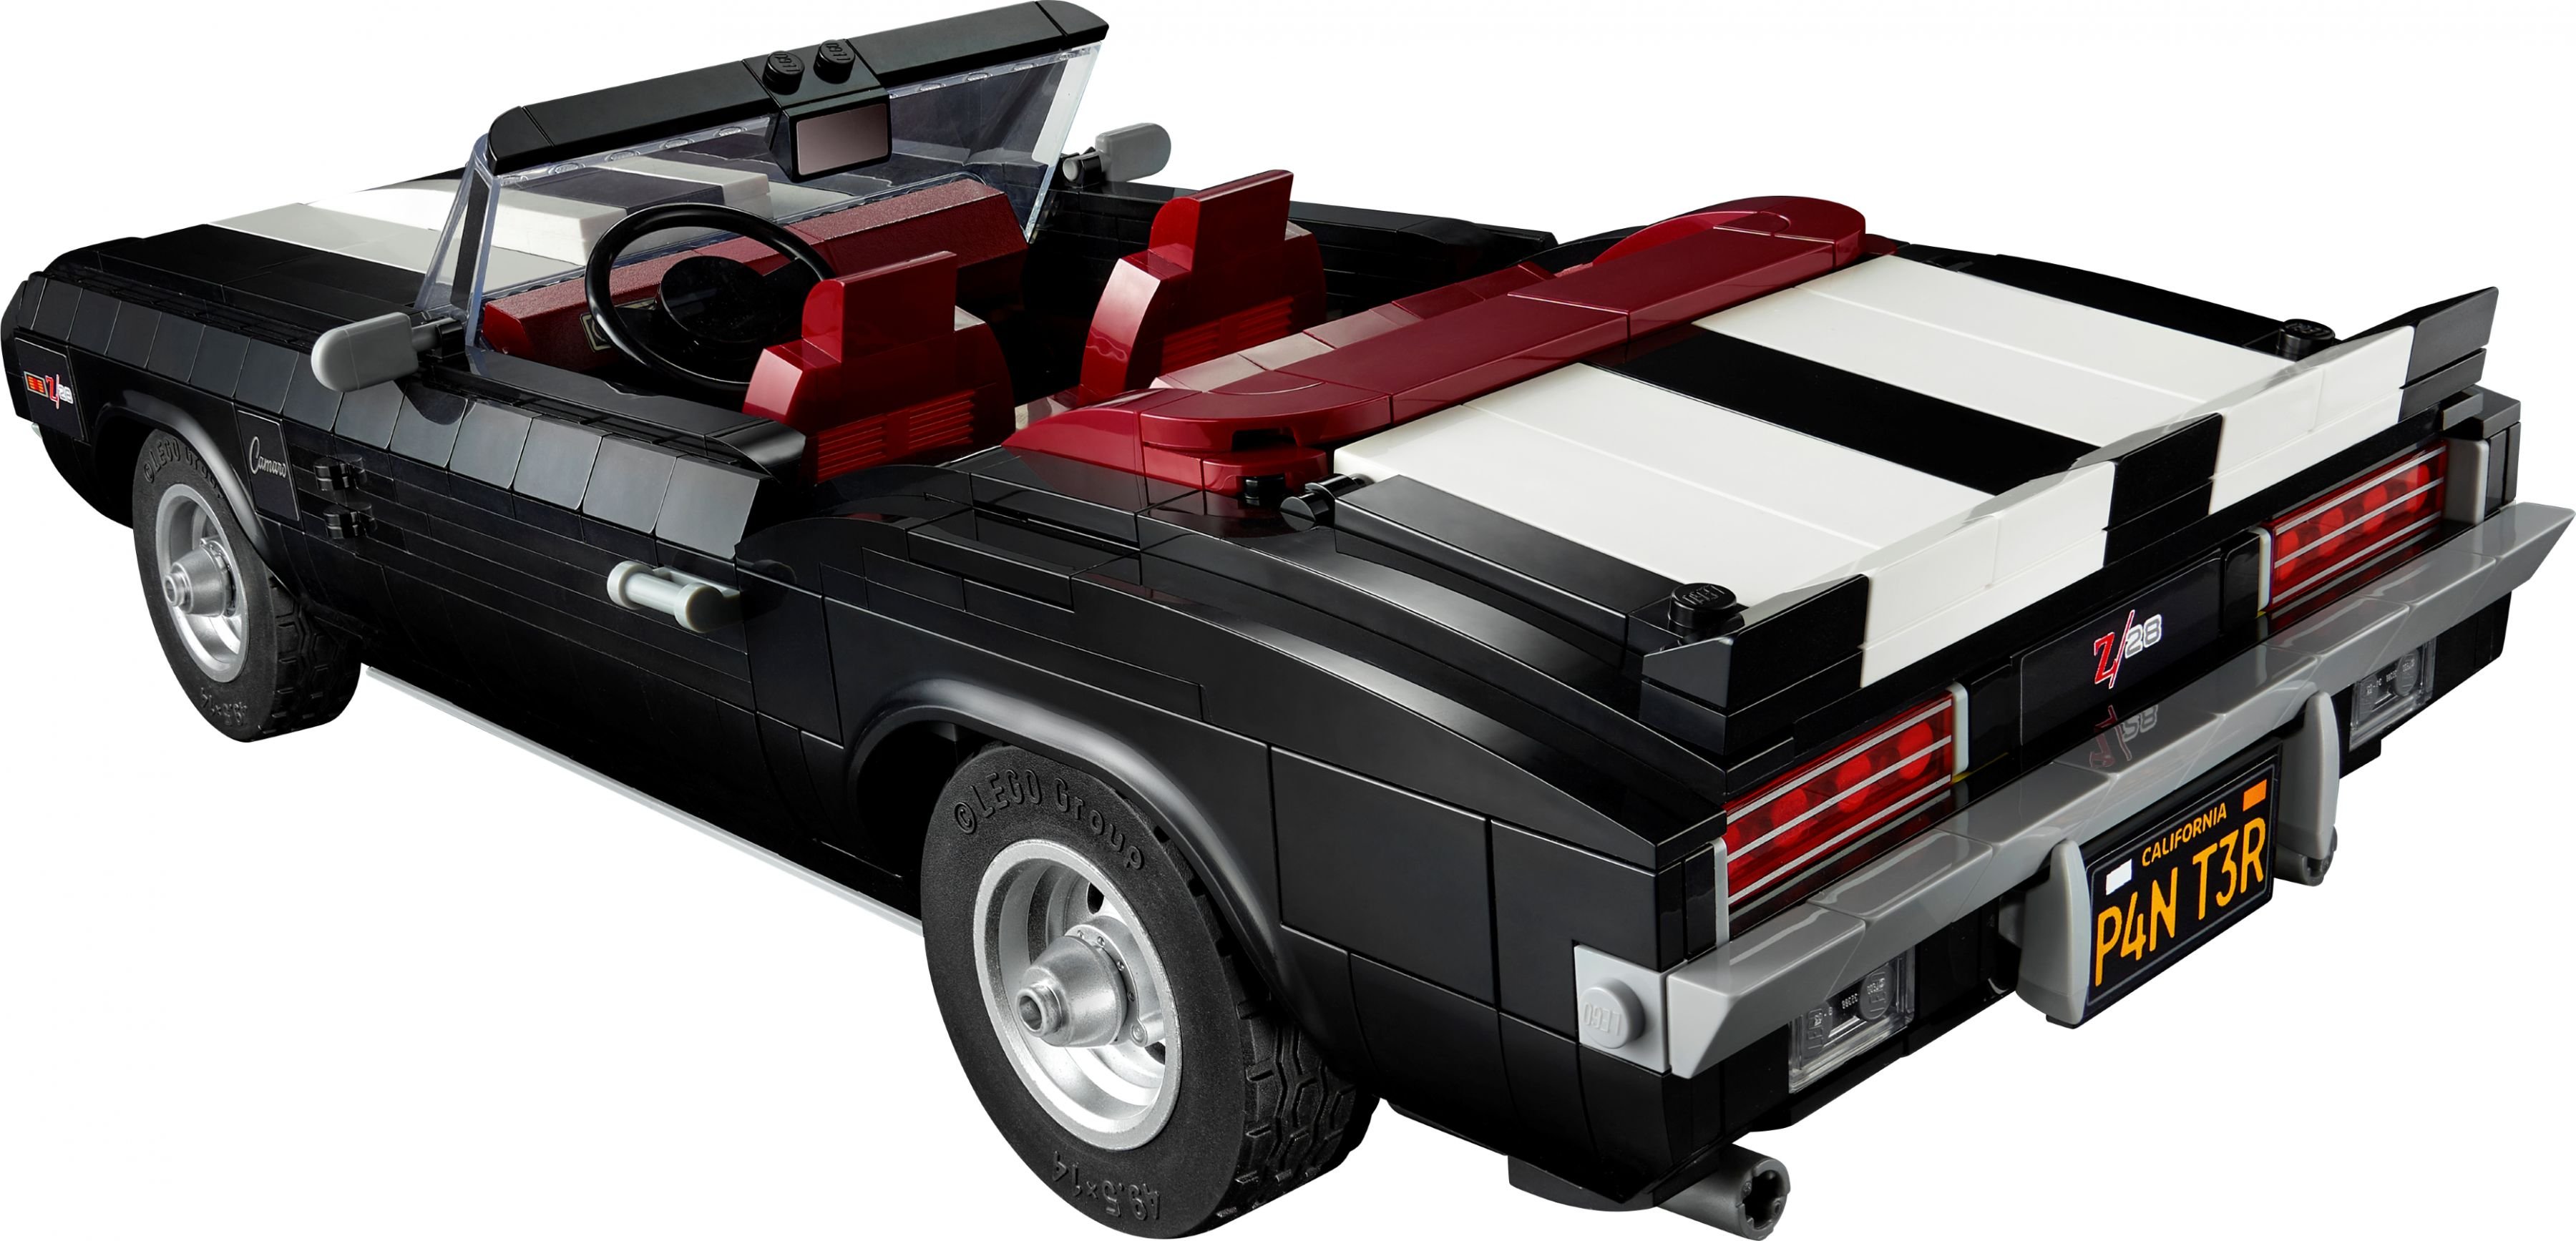 LEGO Advanced Models 10304 Chevrolet Camaro Z28 LEGO_10304_alt4.jpg